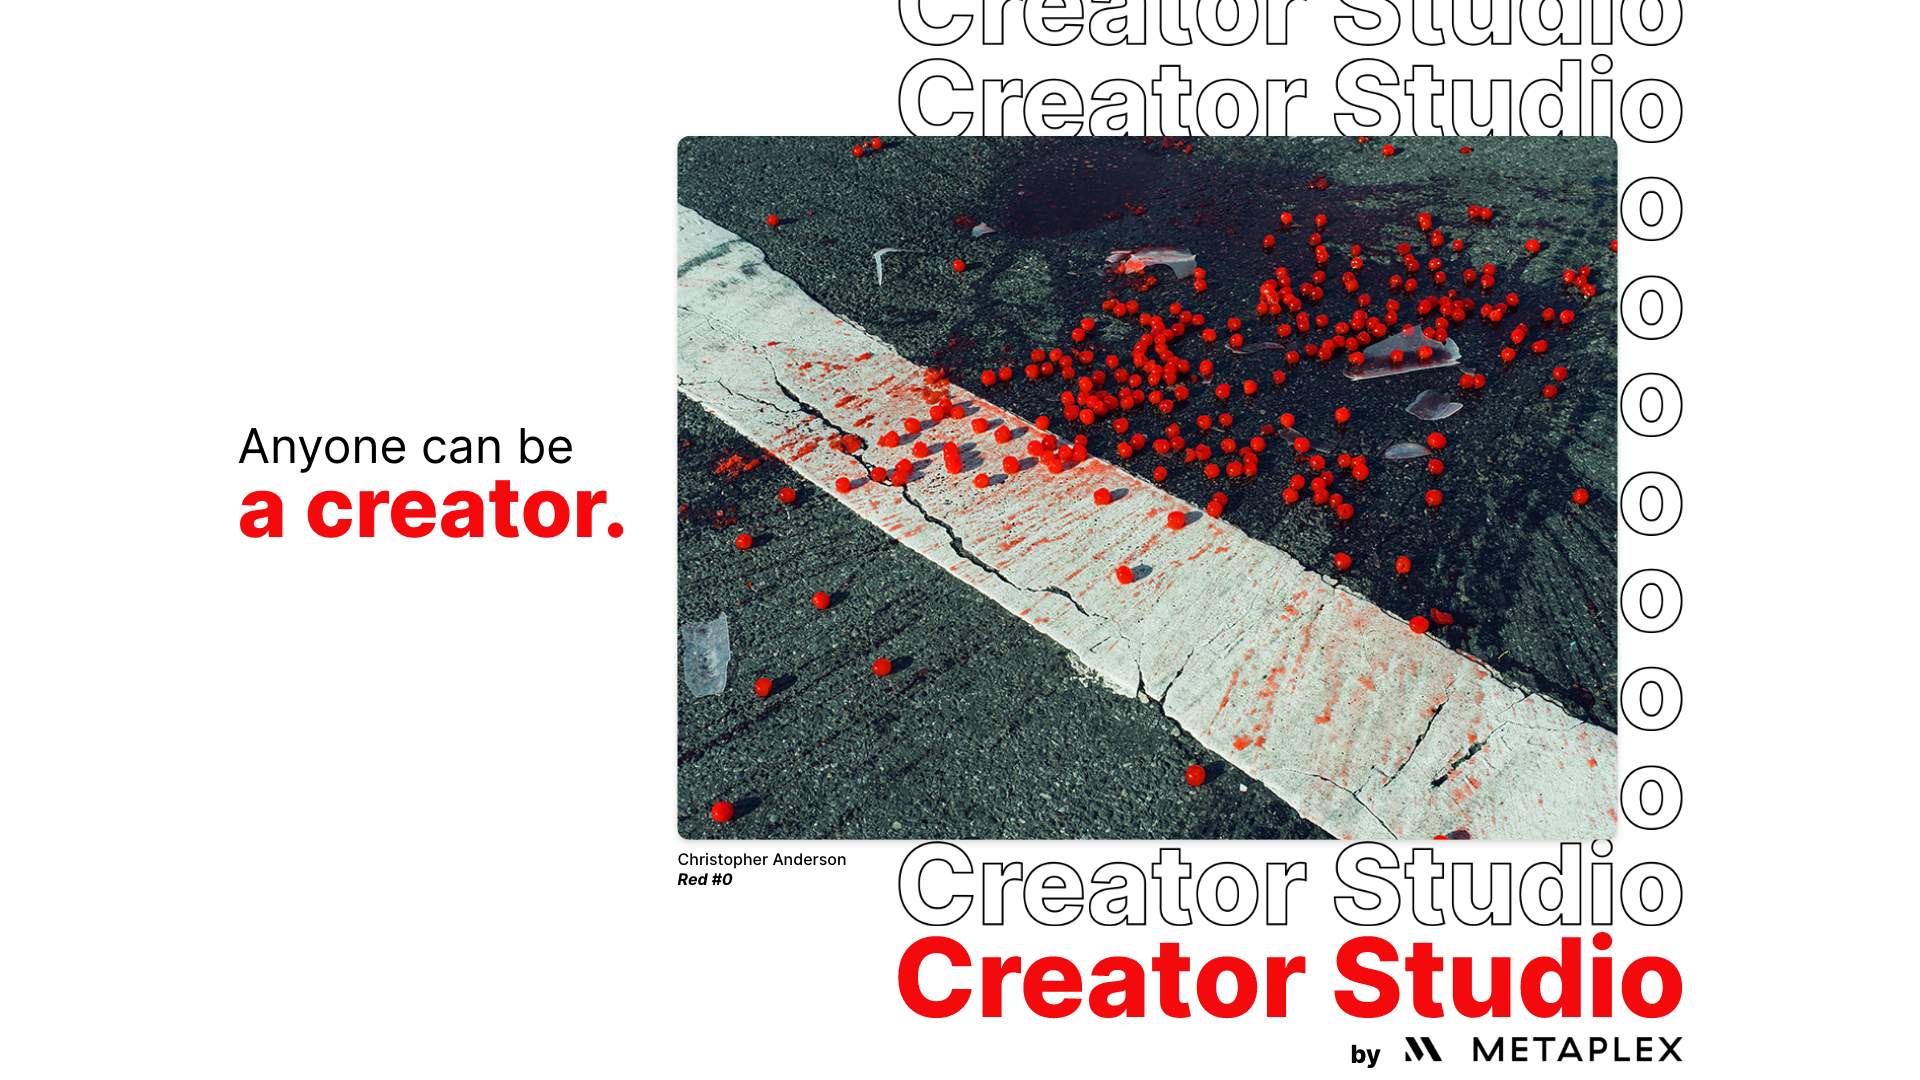 CURRENTLY WORKING ON: Metaplex Creator Studio / Identity, Branding, UX